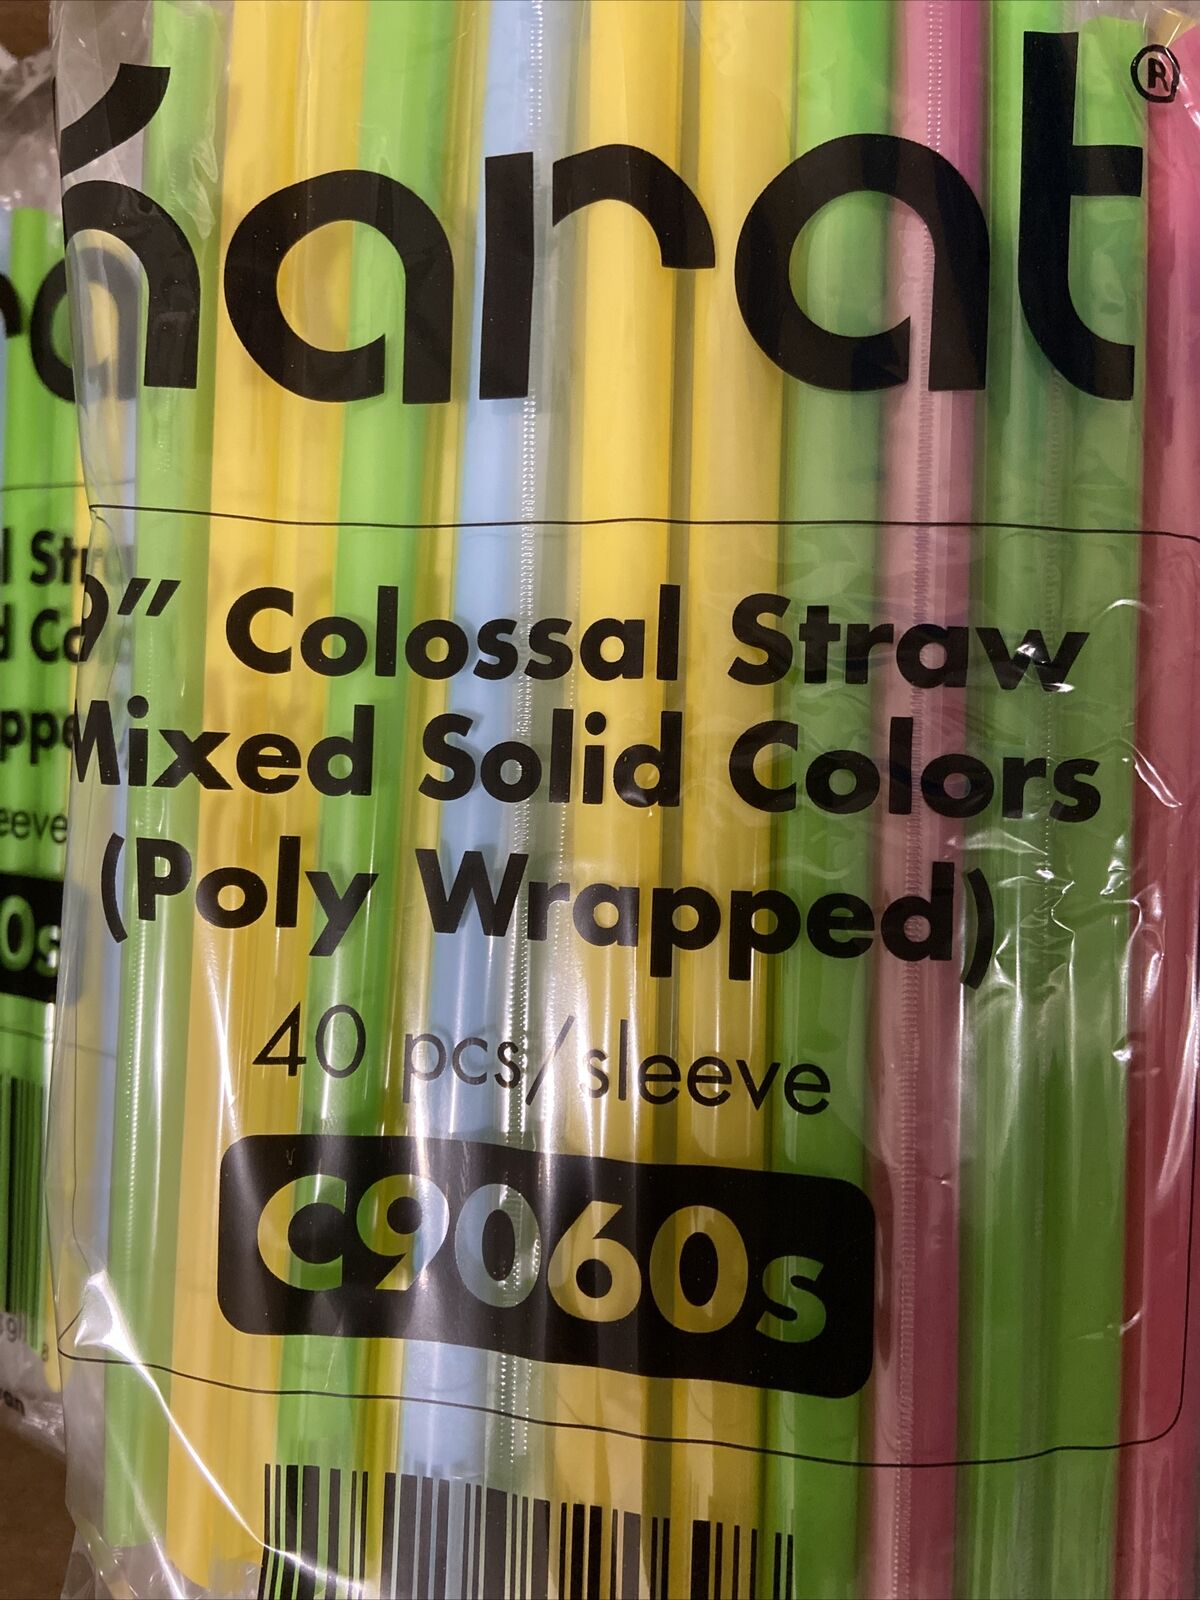 C9060s Karat Mixed Color 40 Individual Wrapped Boba Tea Straws